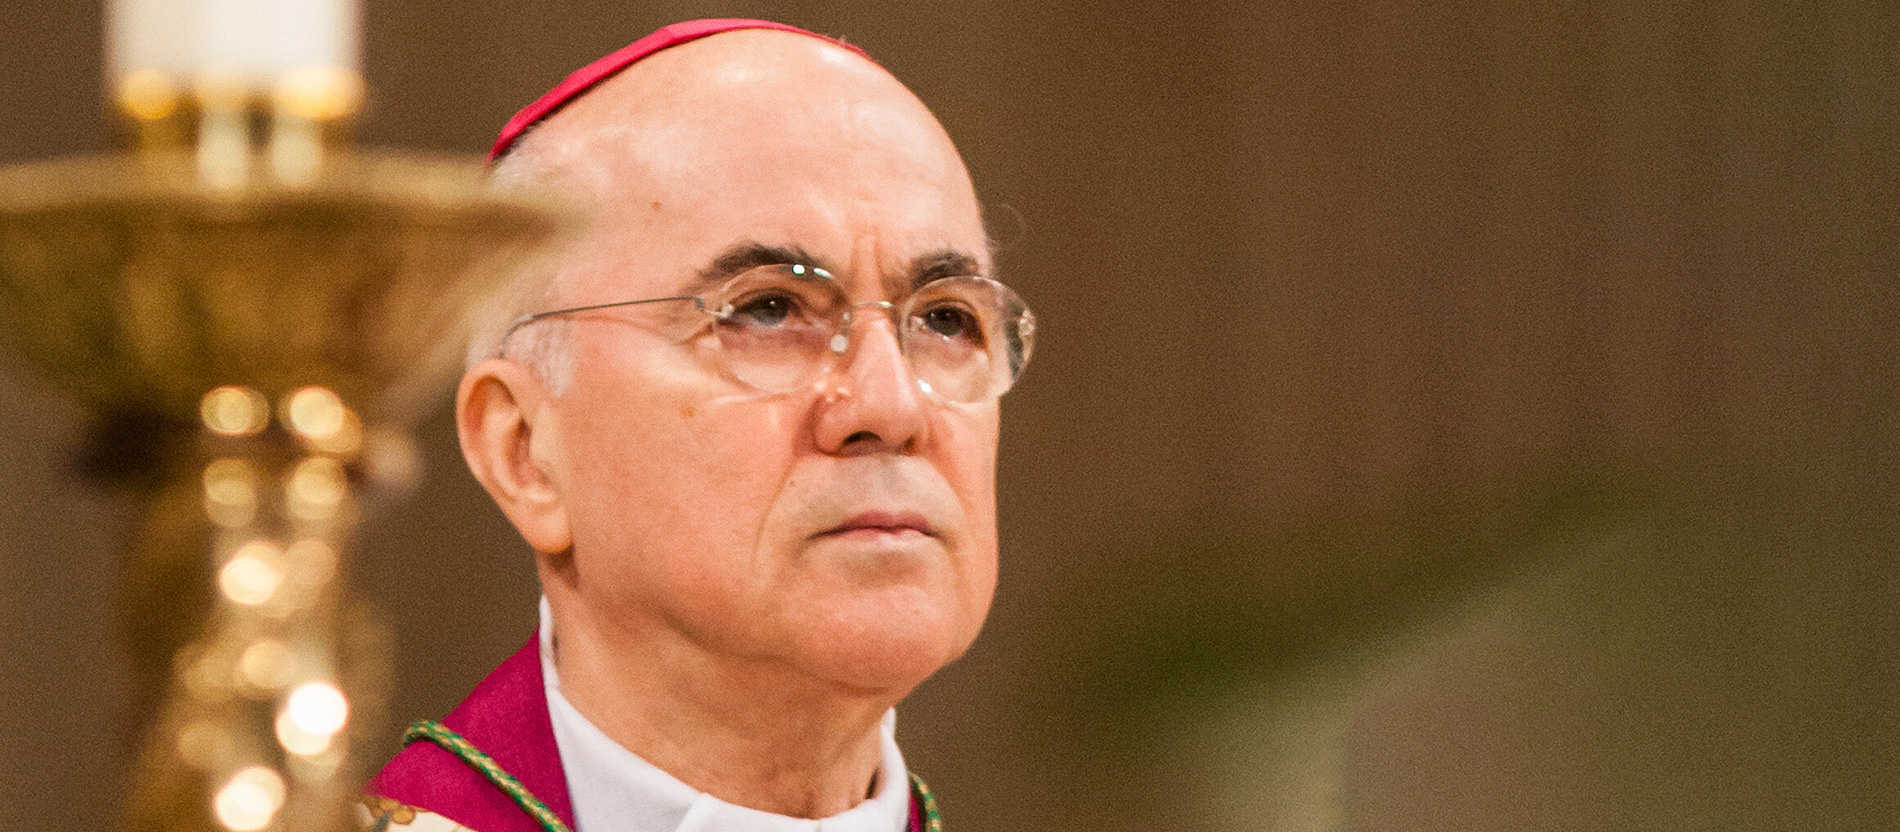 Nadbiskup Viganò ekskomuniciran zbog raskola